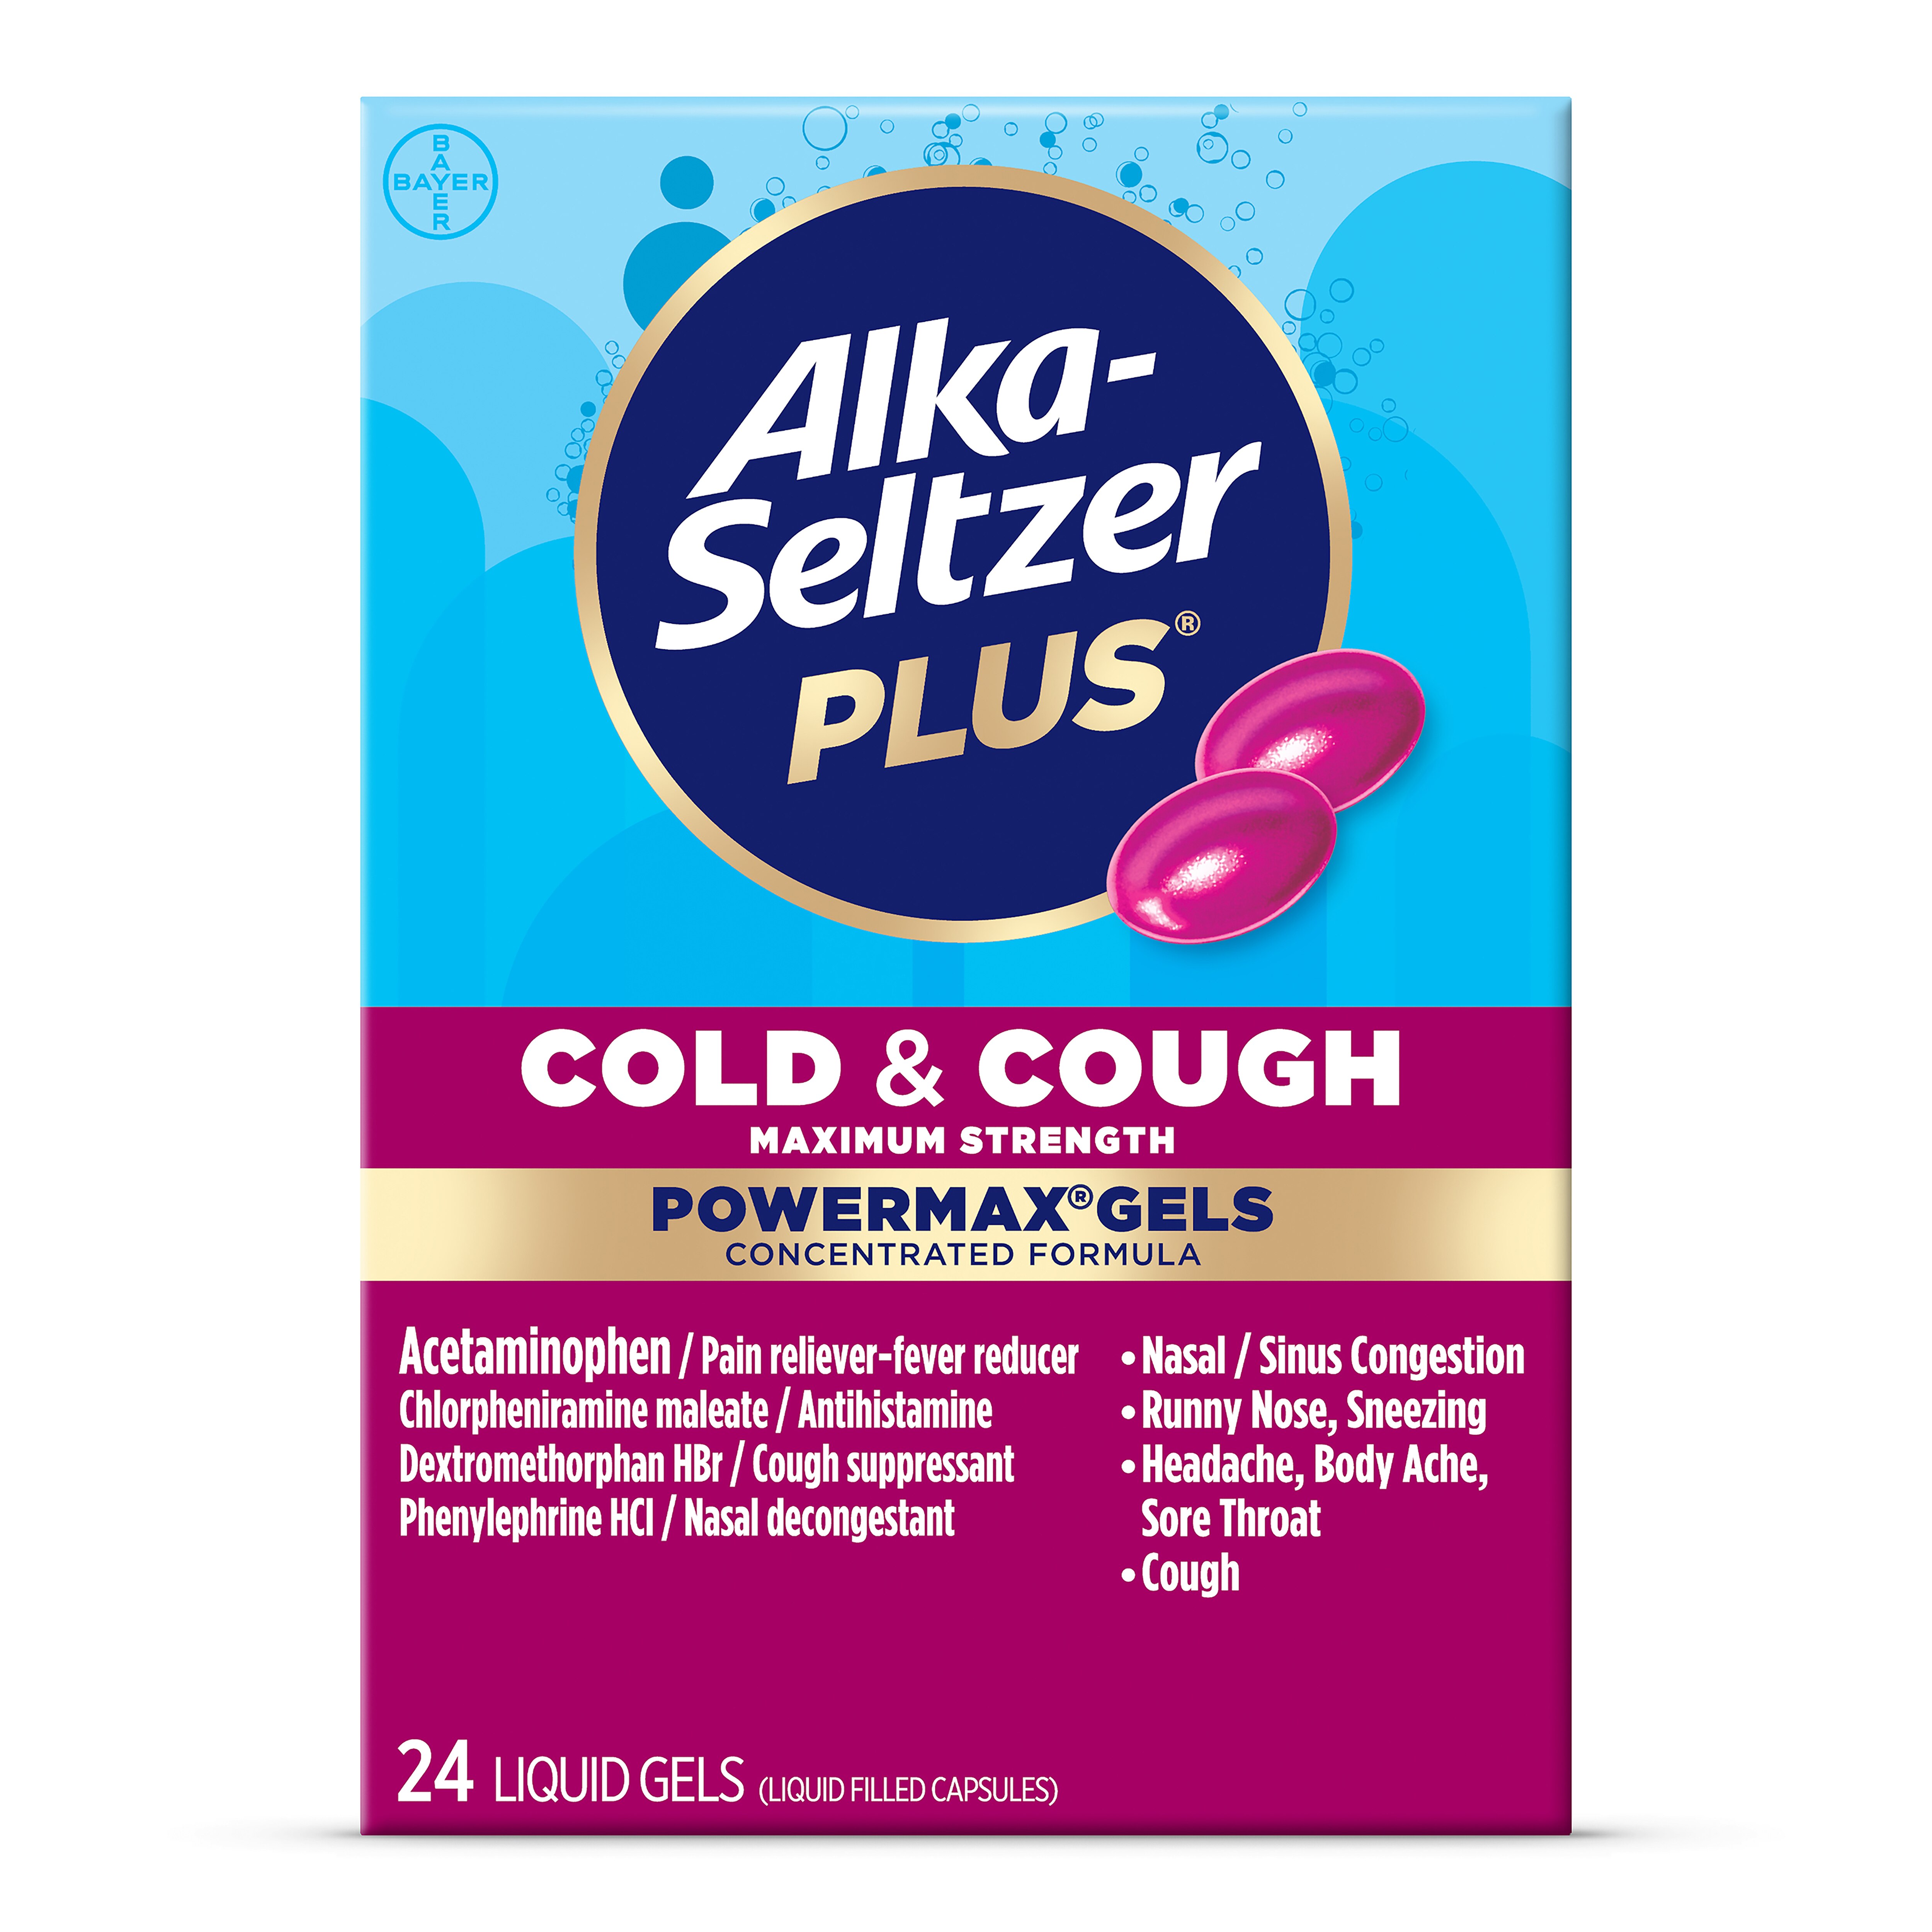 Alka-Seltzer Plus Maximum Strength Cold & Cough PowerMax Gels, 24 CT